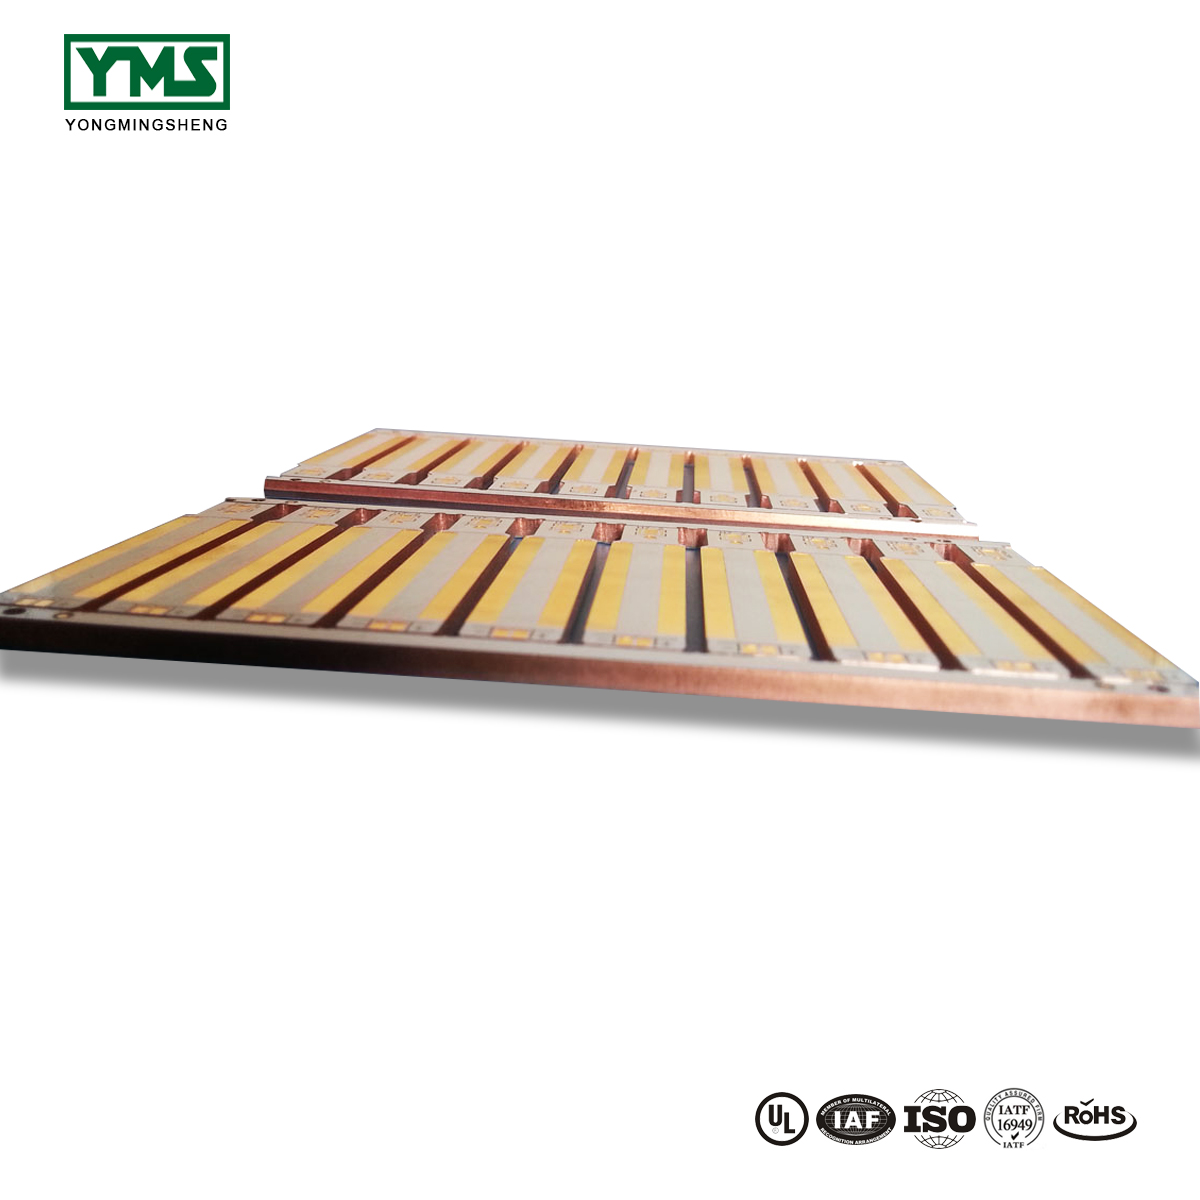 Renewable Design for Hdi Pcb - Copper Base High Power (Metal core) Board | YMS PCB – Yongmingsheng